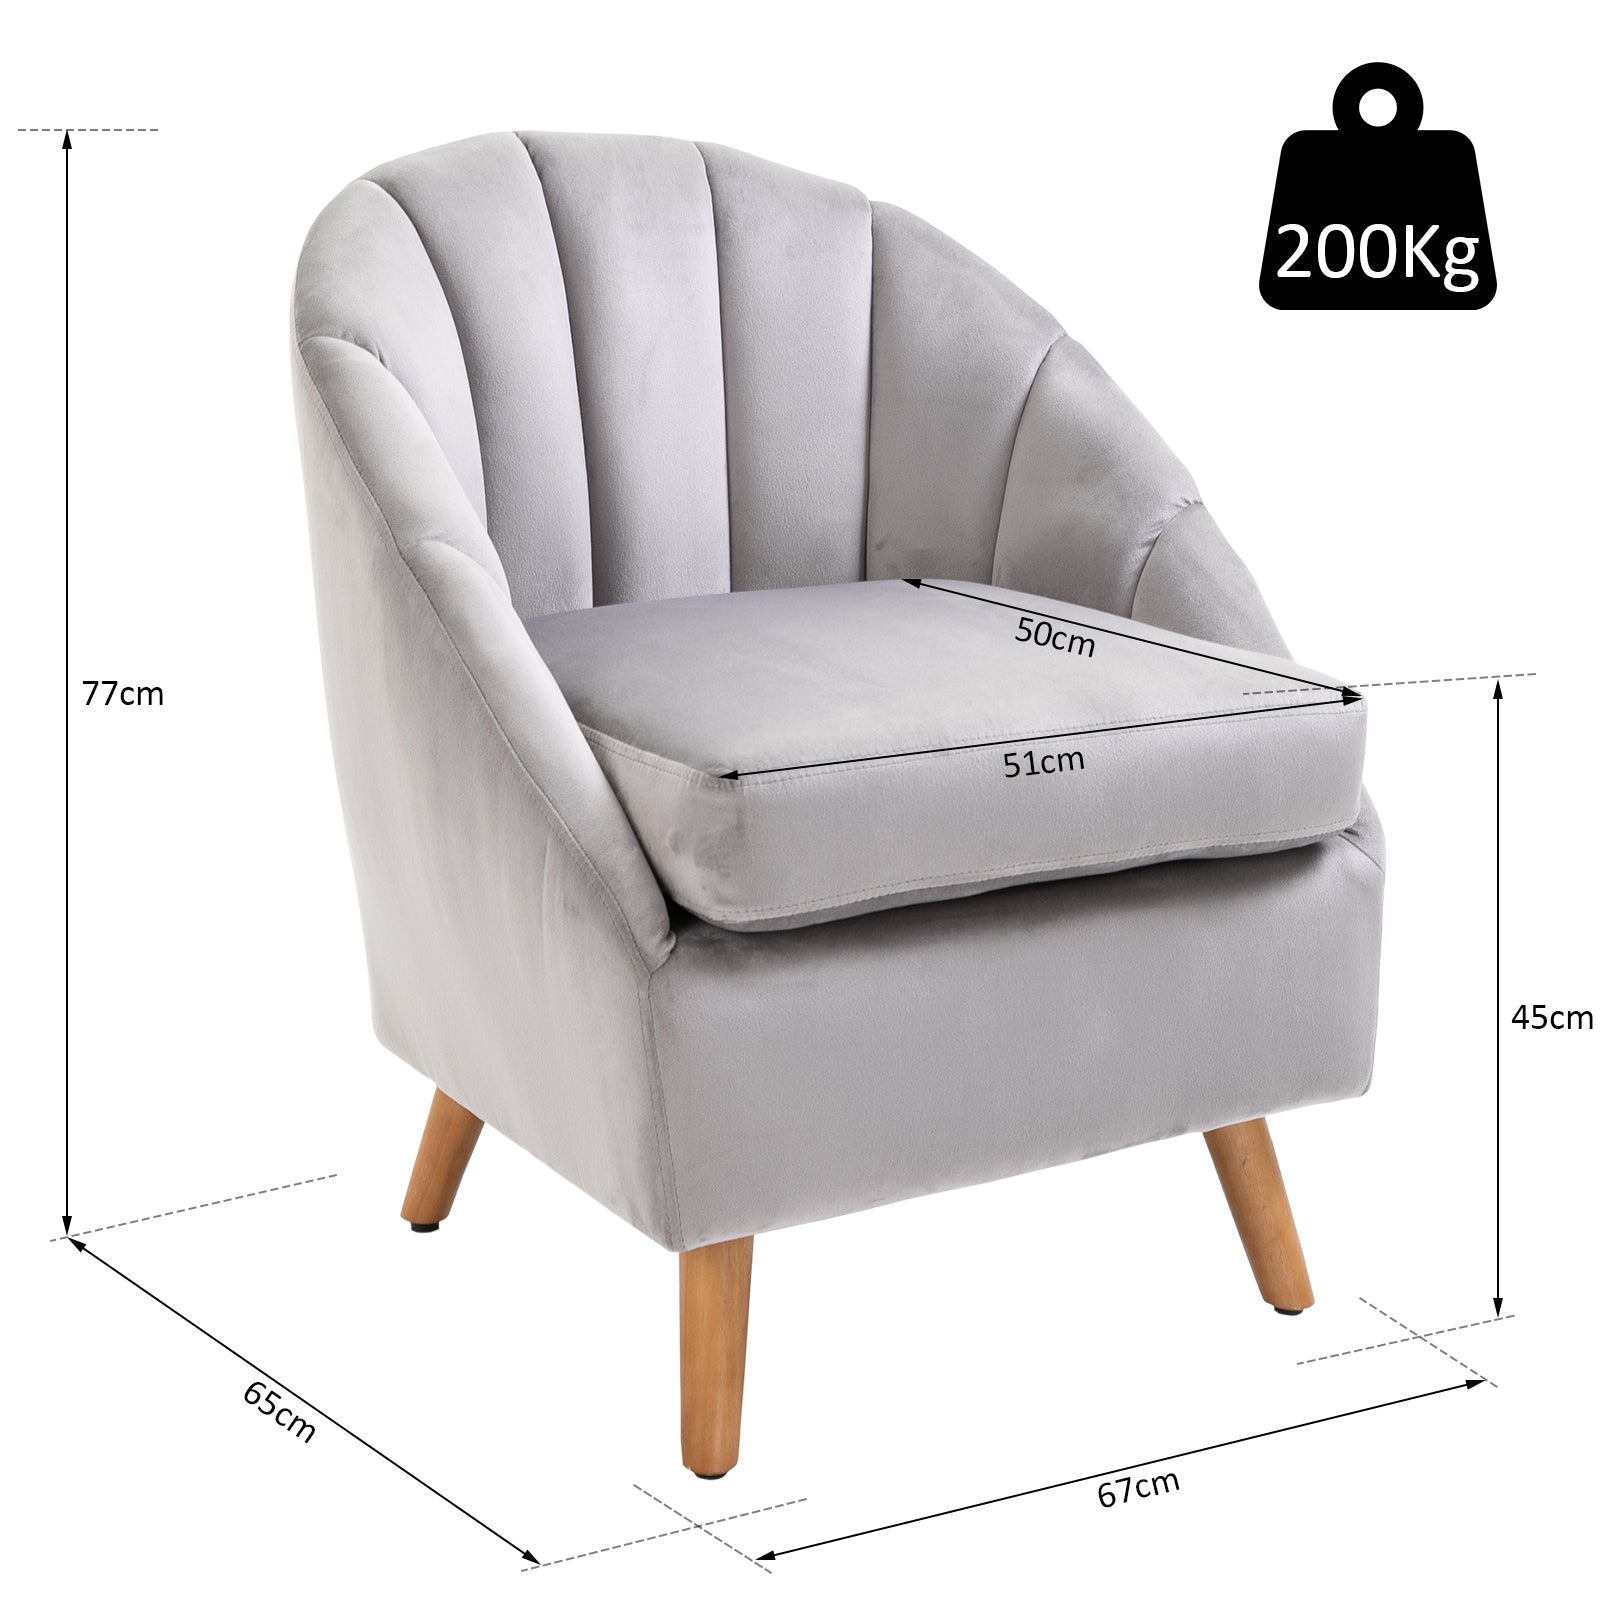 Decadent Single Lounge Chair Velvet-Look Upholstery W/ Wooden Legs - Grey